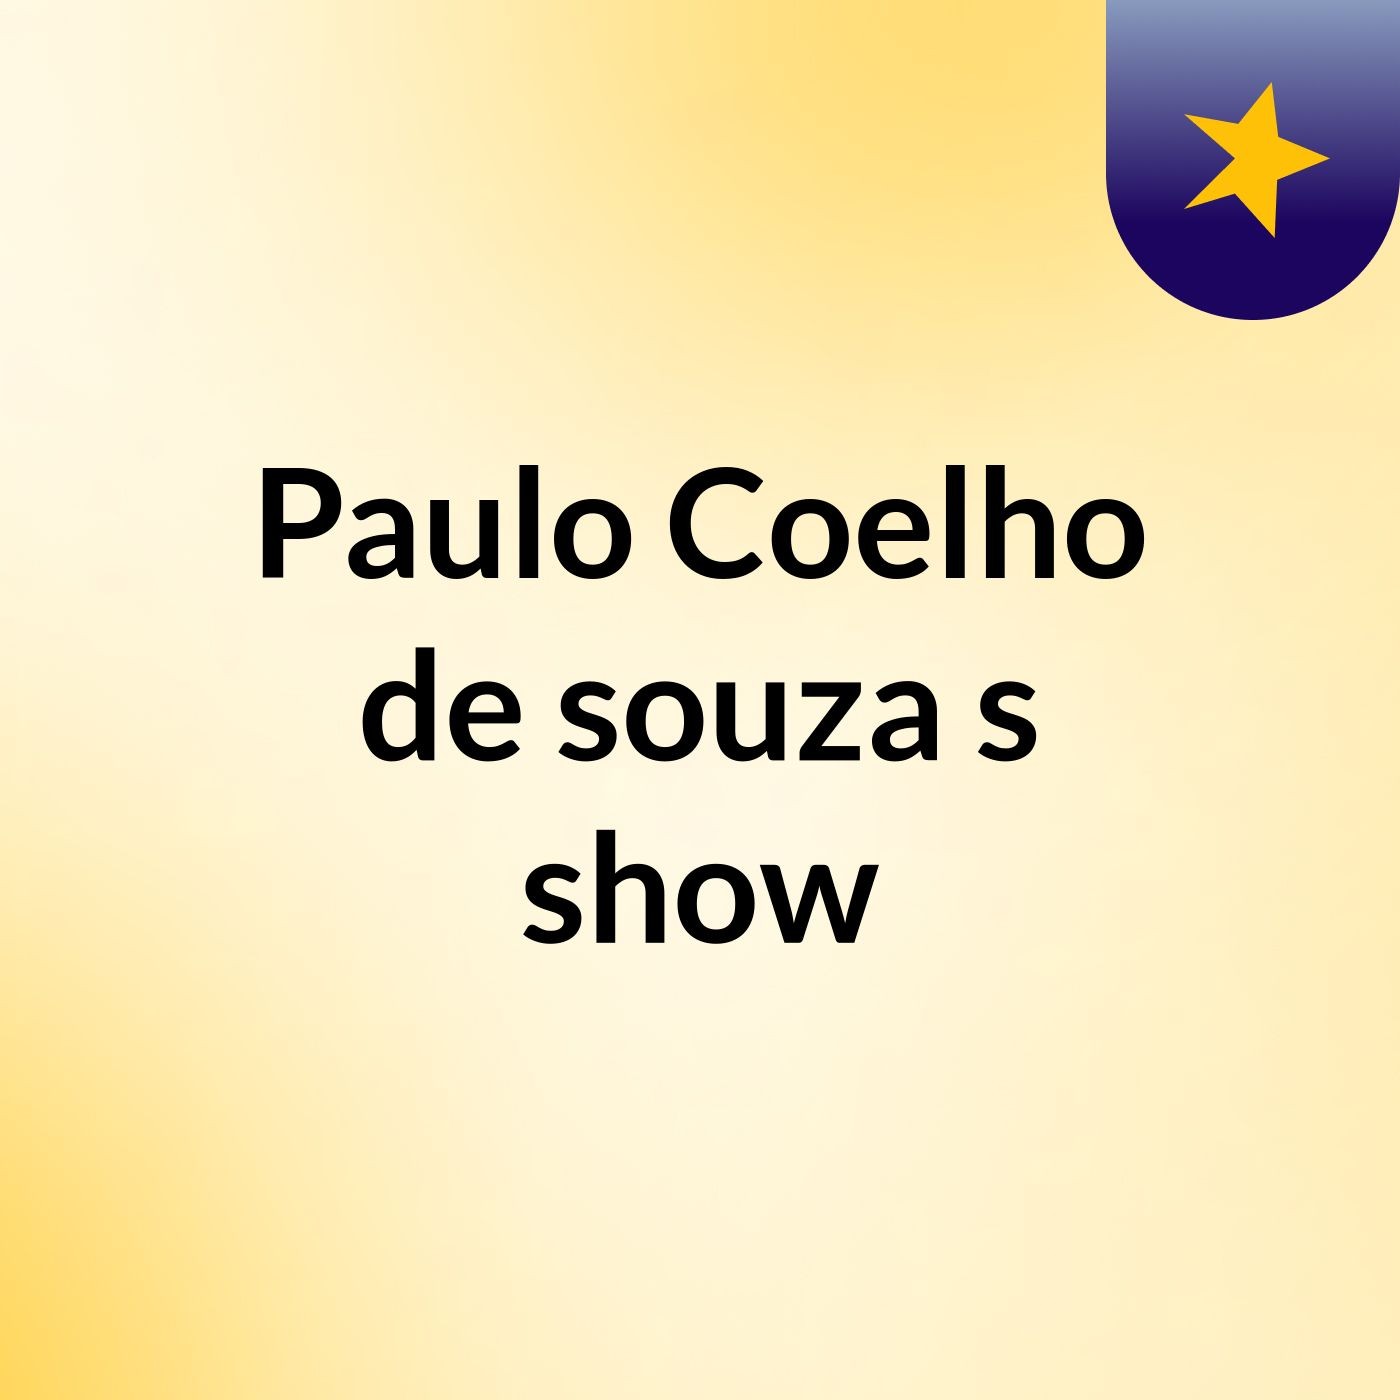 Paulo Coelho de souza's show